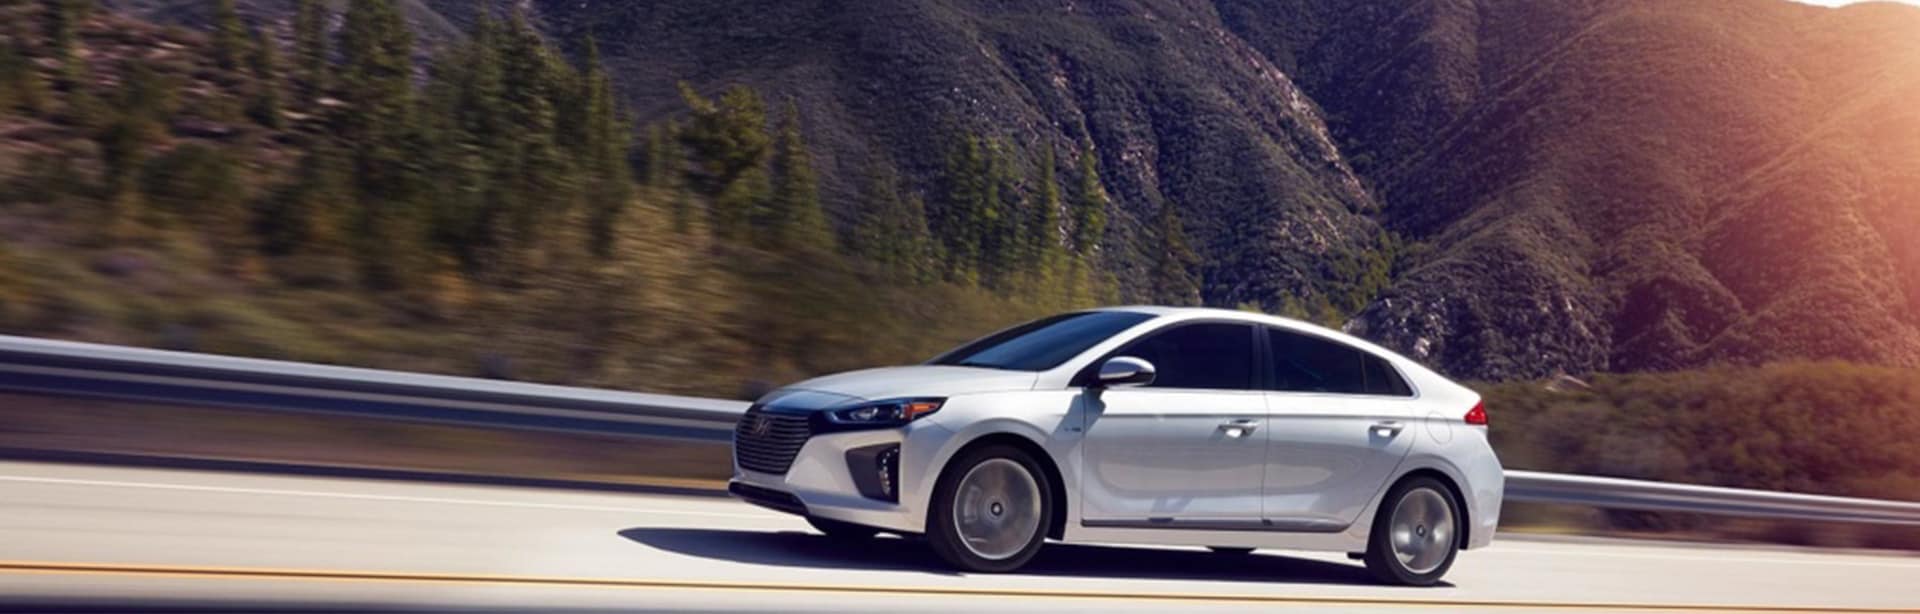 Hyundai Hybrid Cars in Goshen, IN: How Hybrids Help the Environment